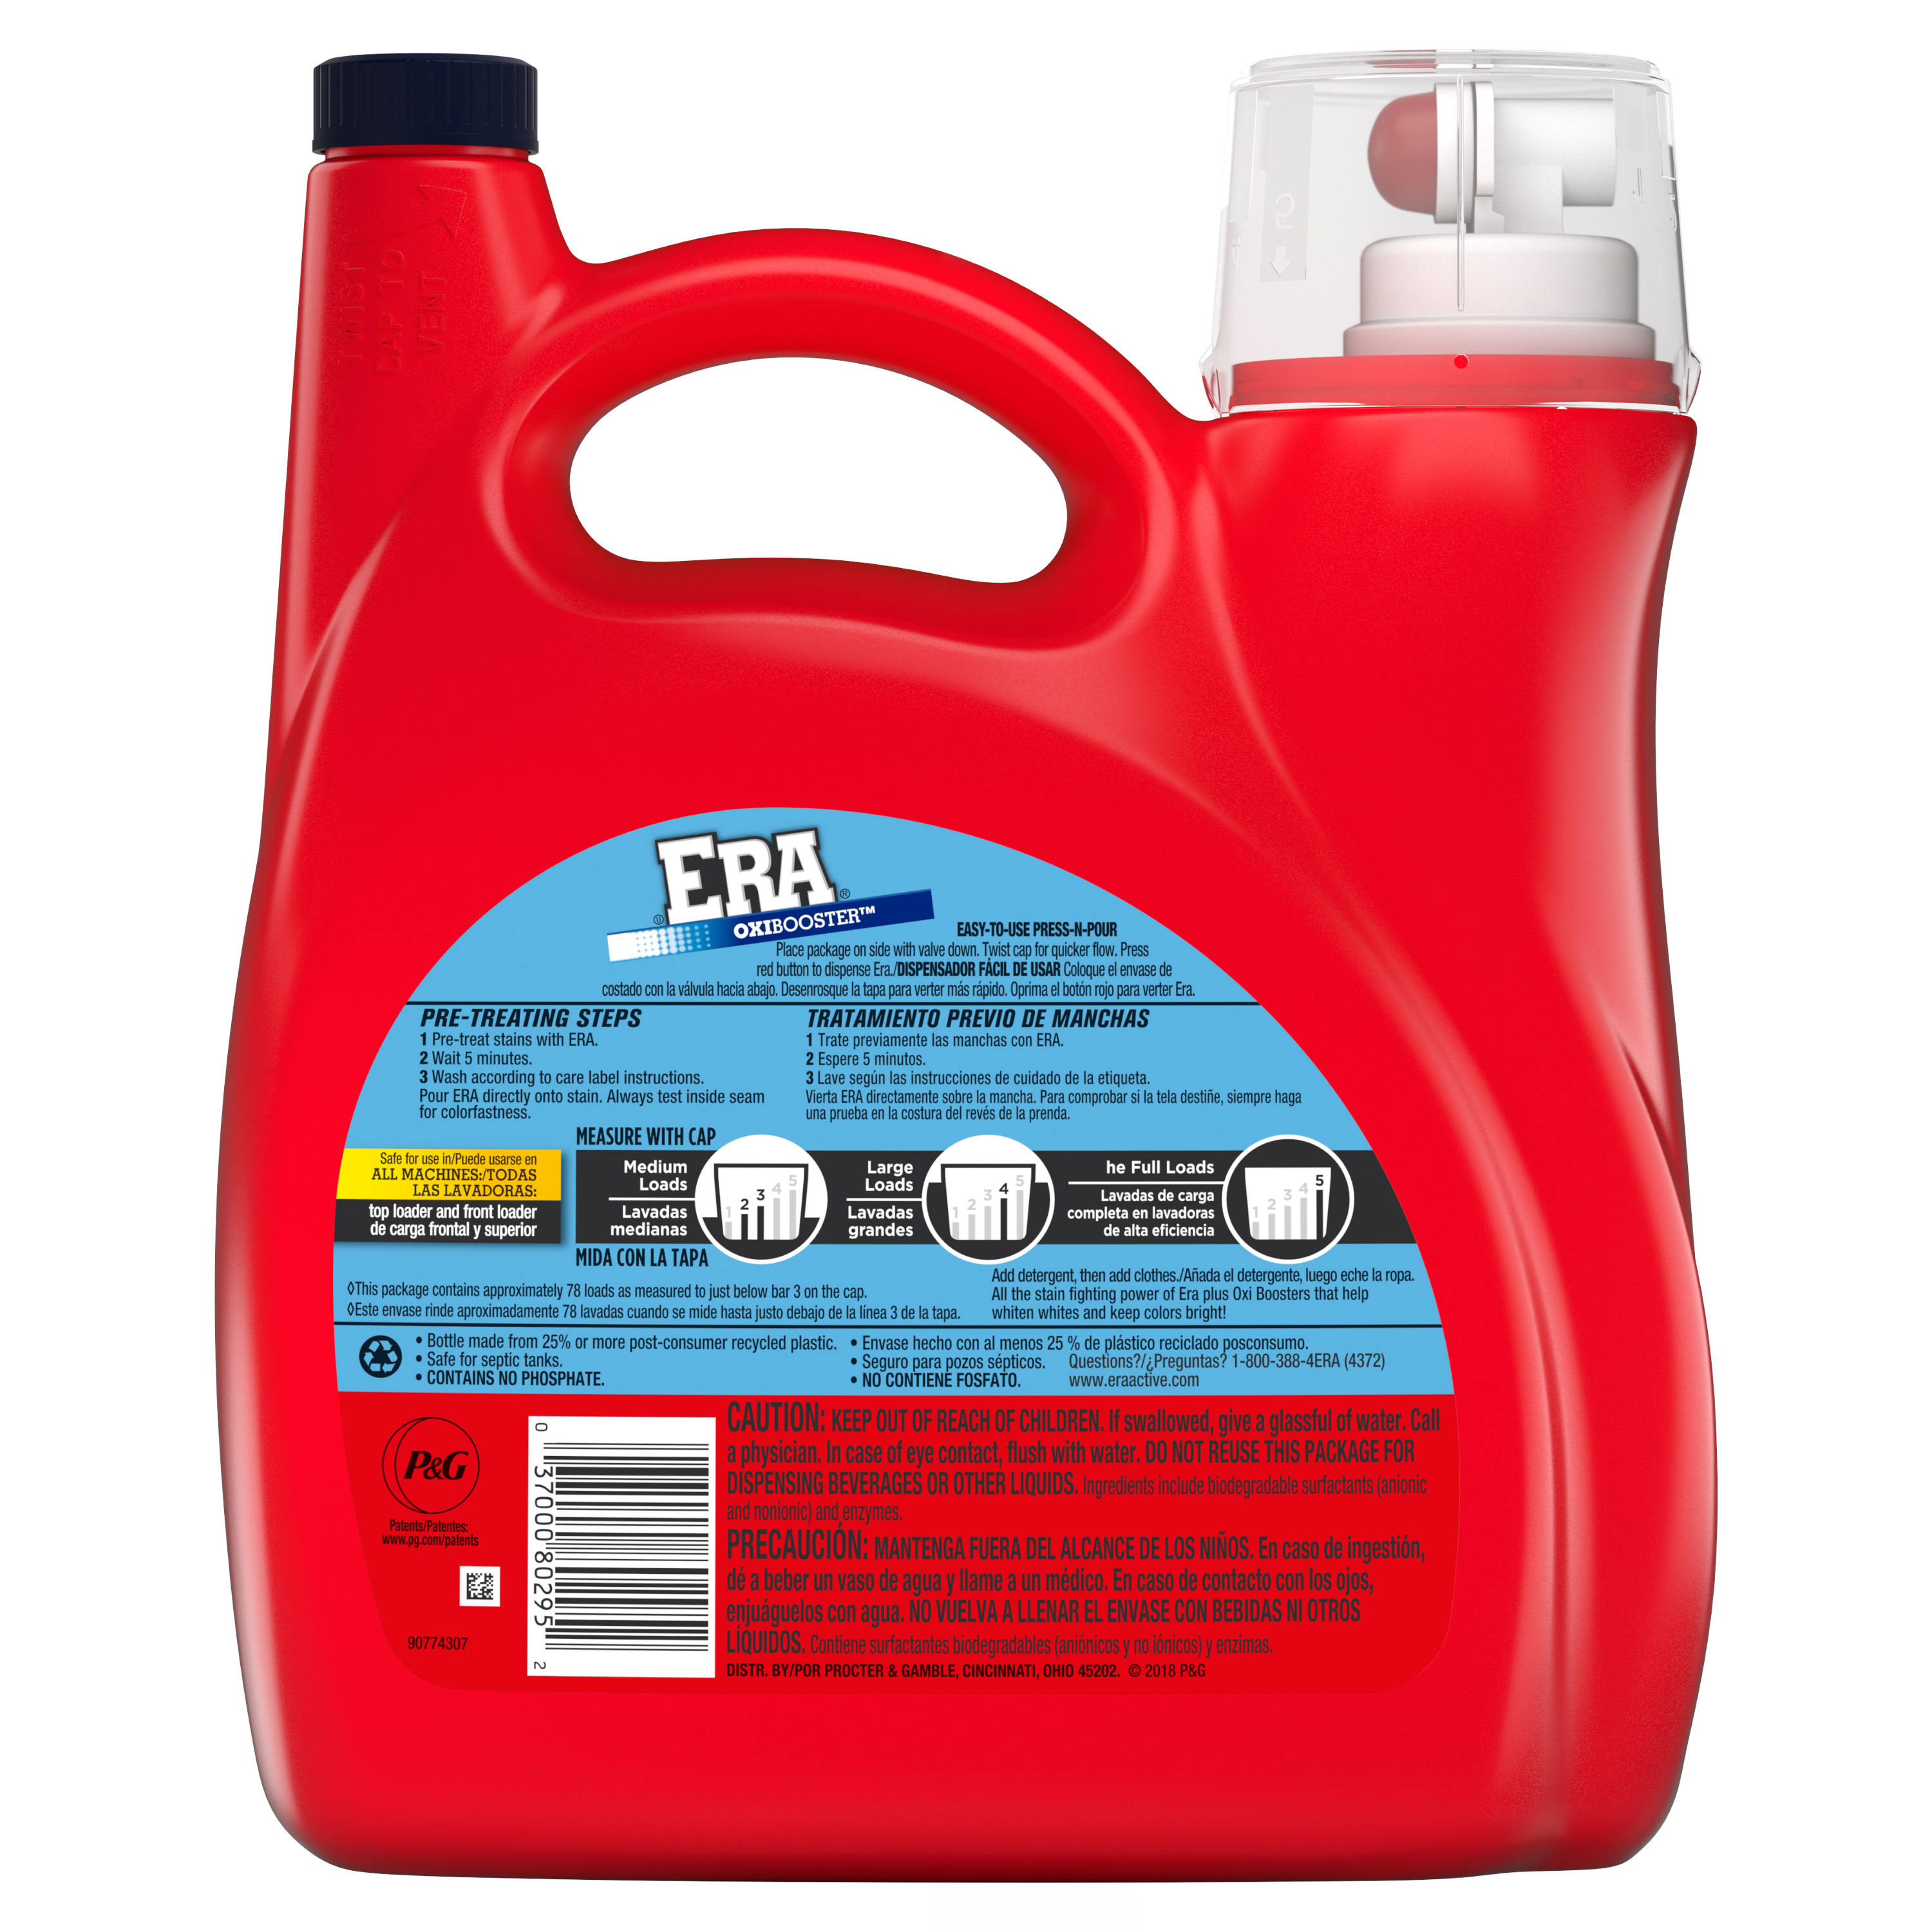 Era Oxibooster 78 Loads, Liquid Laundry Detergent, 150 fl oz - image 3 of 6